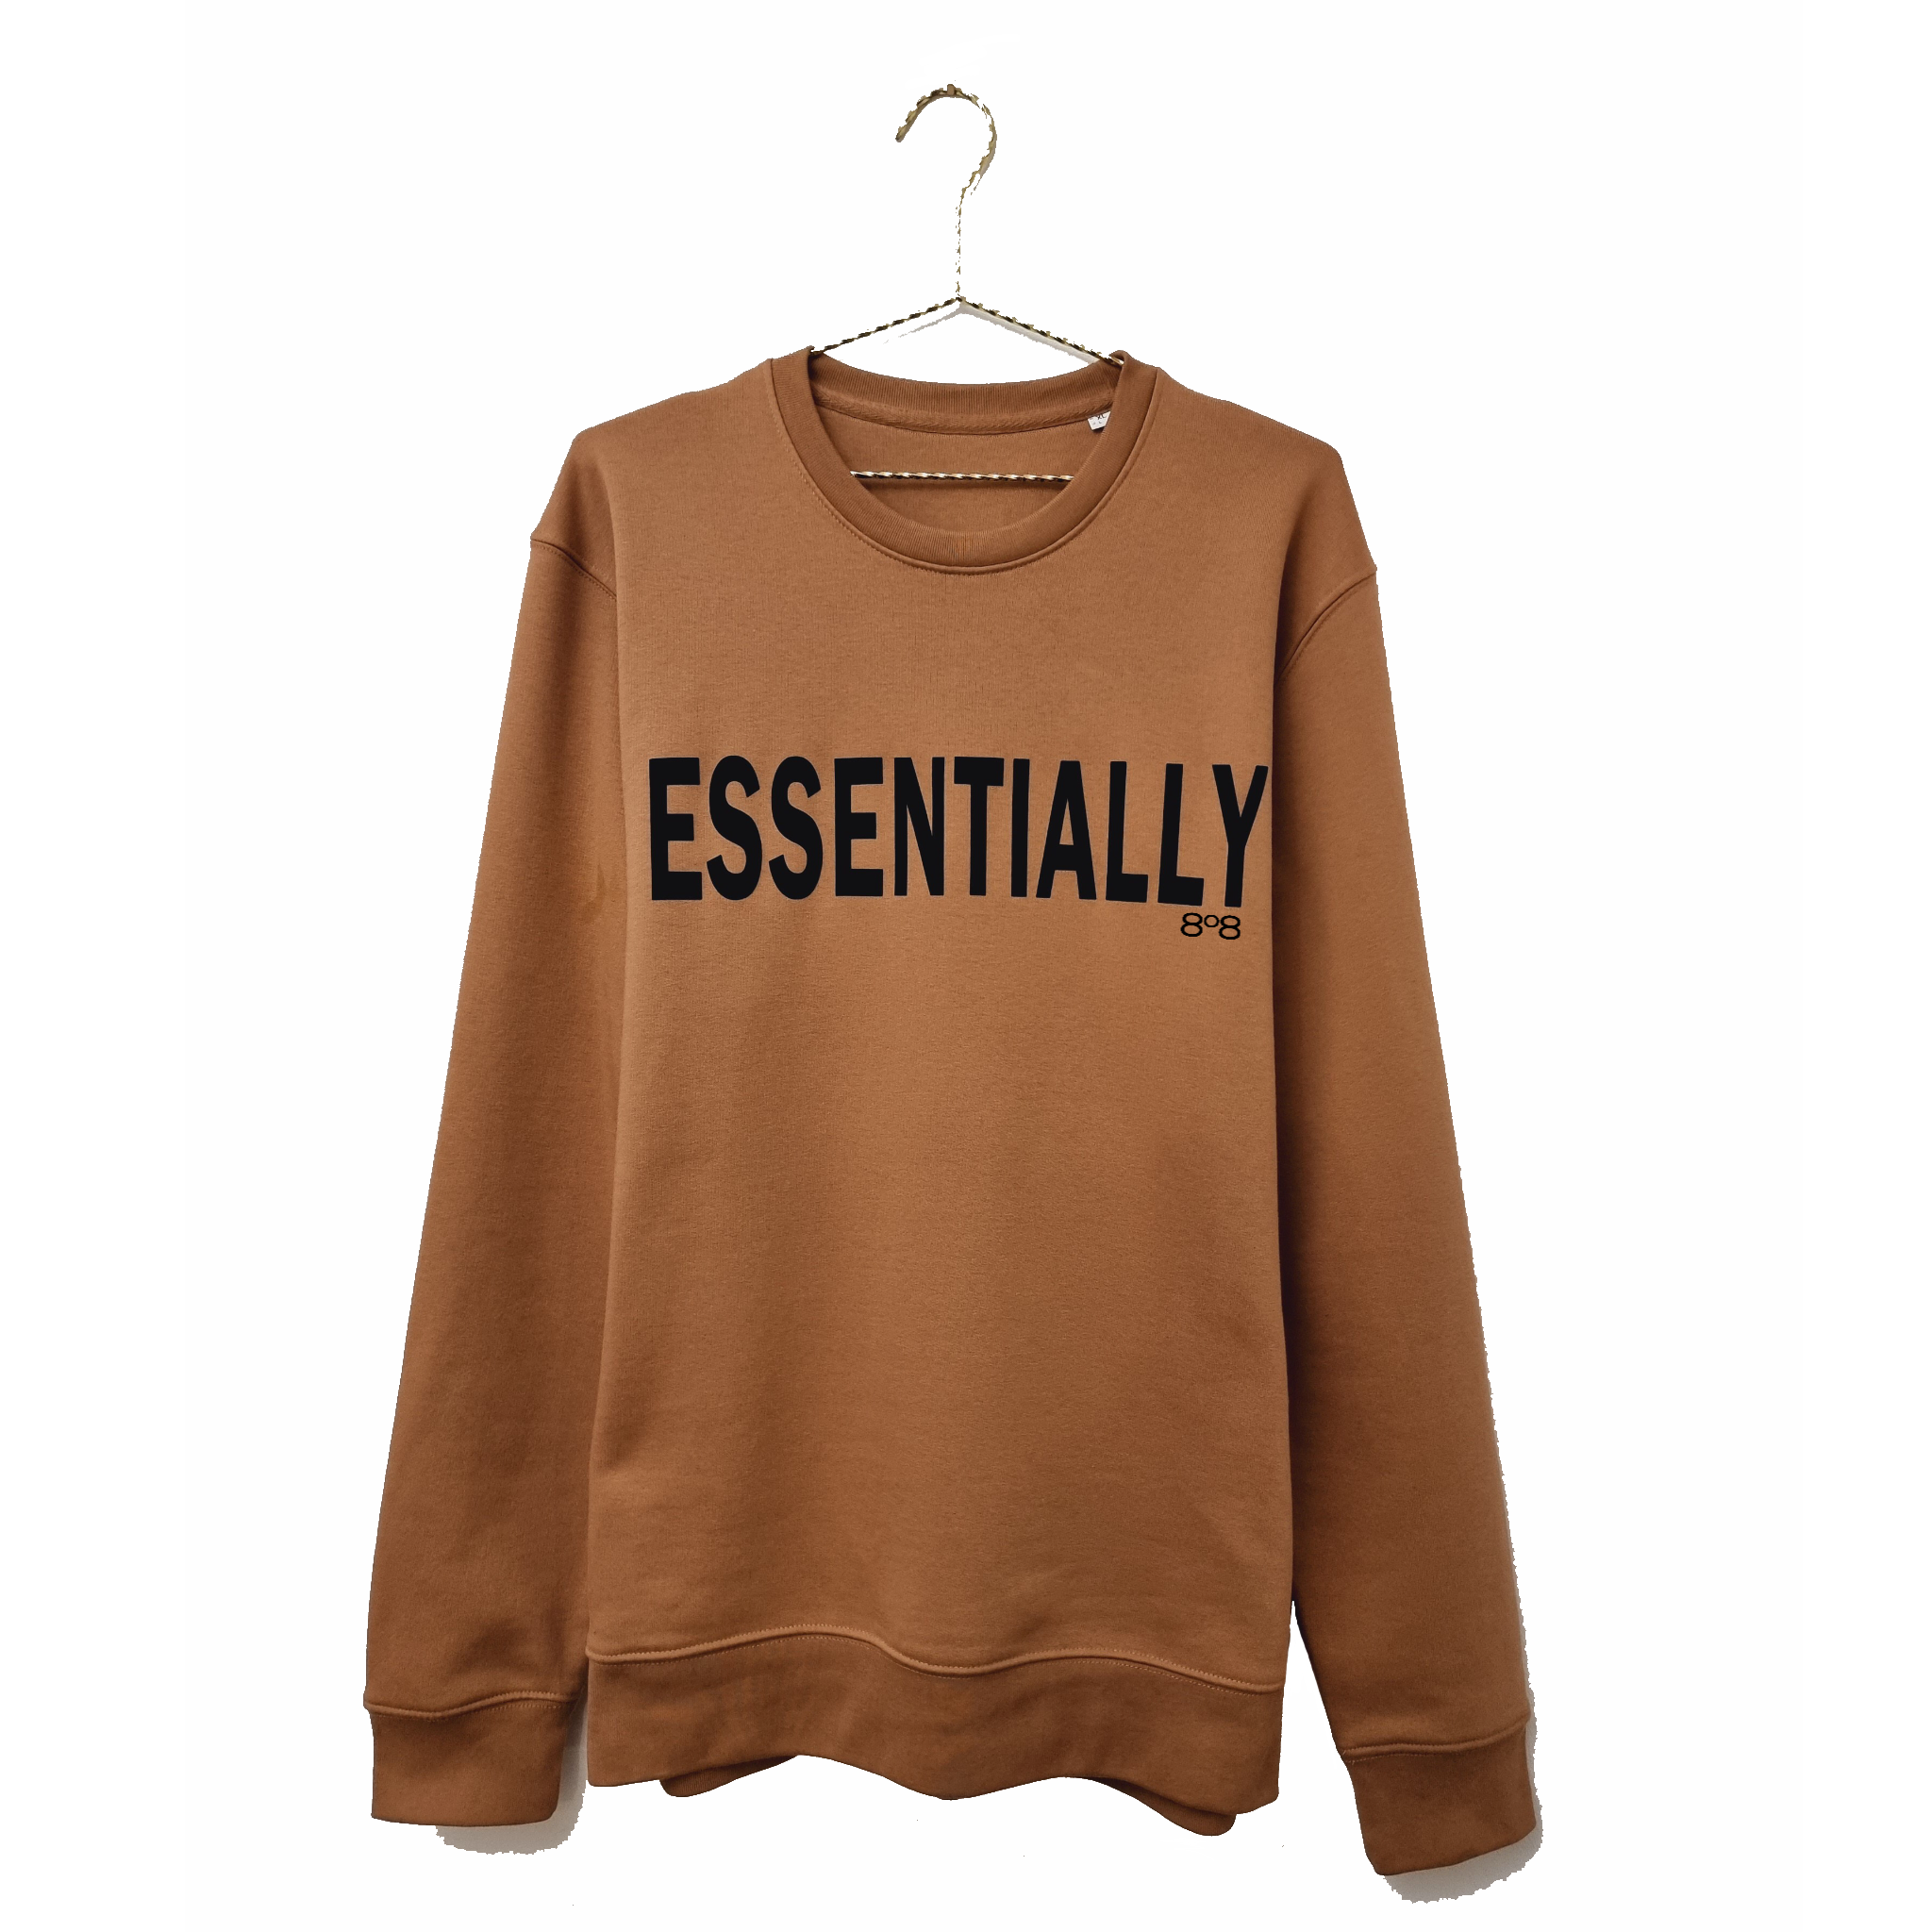 Essentially Premium Sweatshirt - Caramel